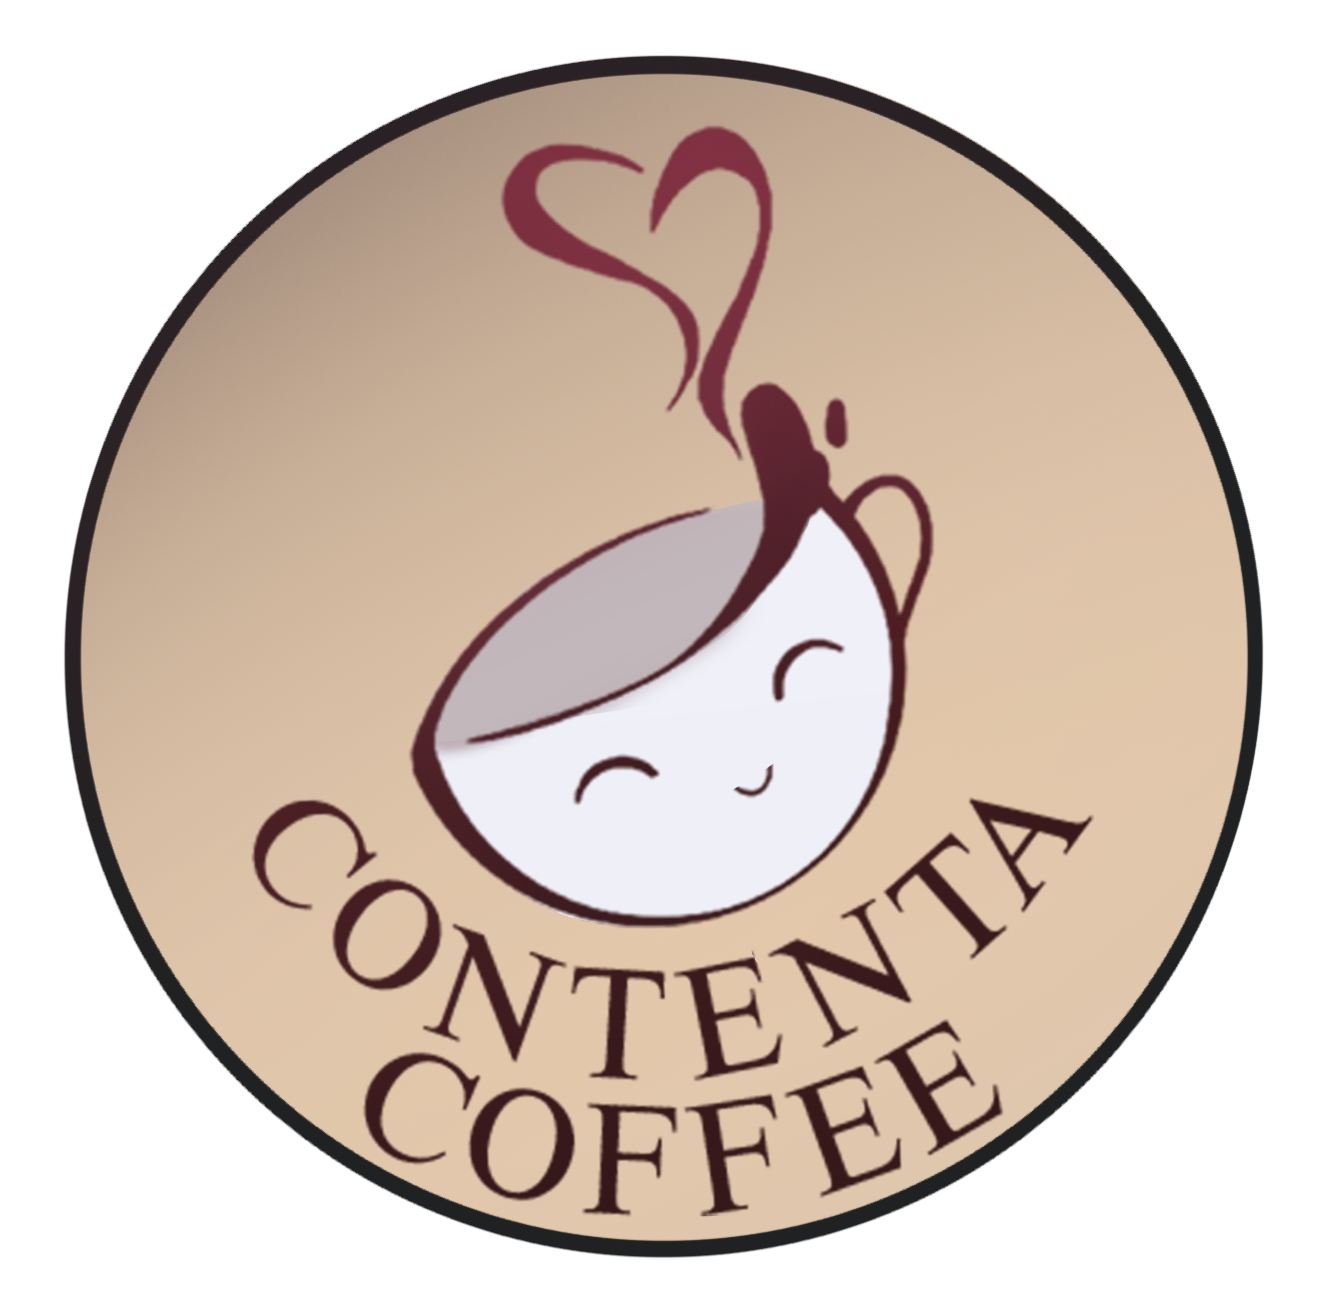 Contenta Coffee